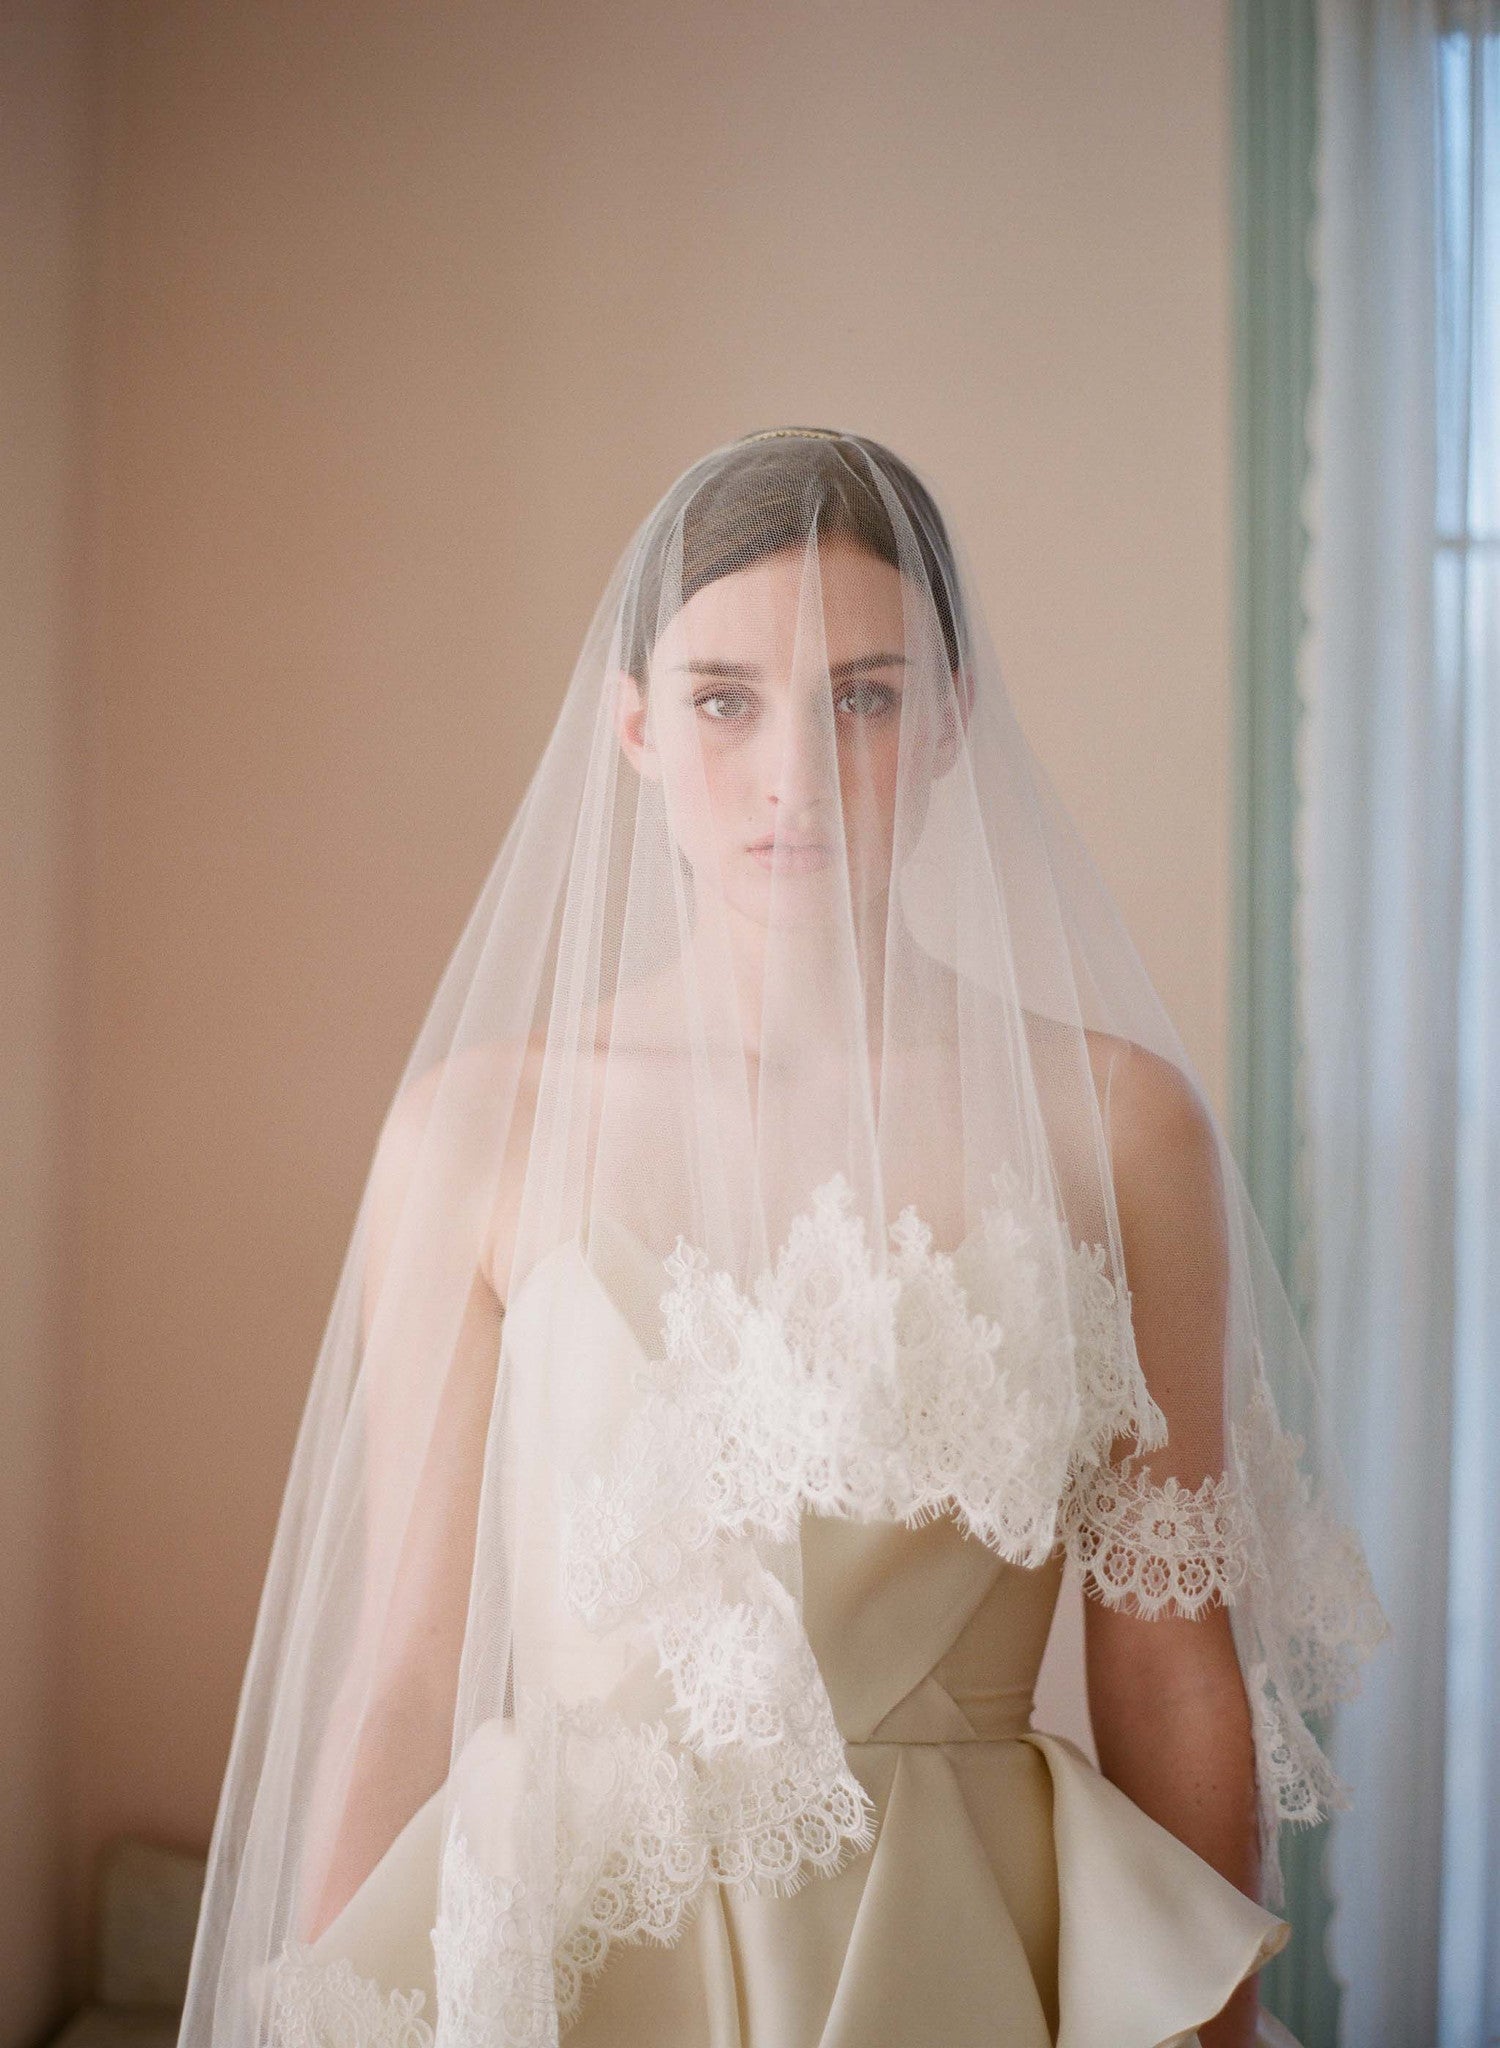 Wedding veil - Mantilla lace trimmed veil with headband - Style